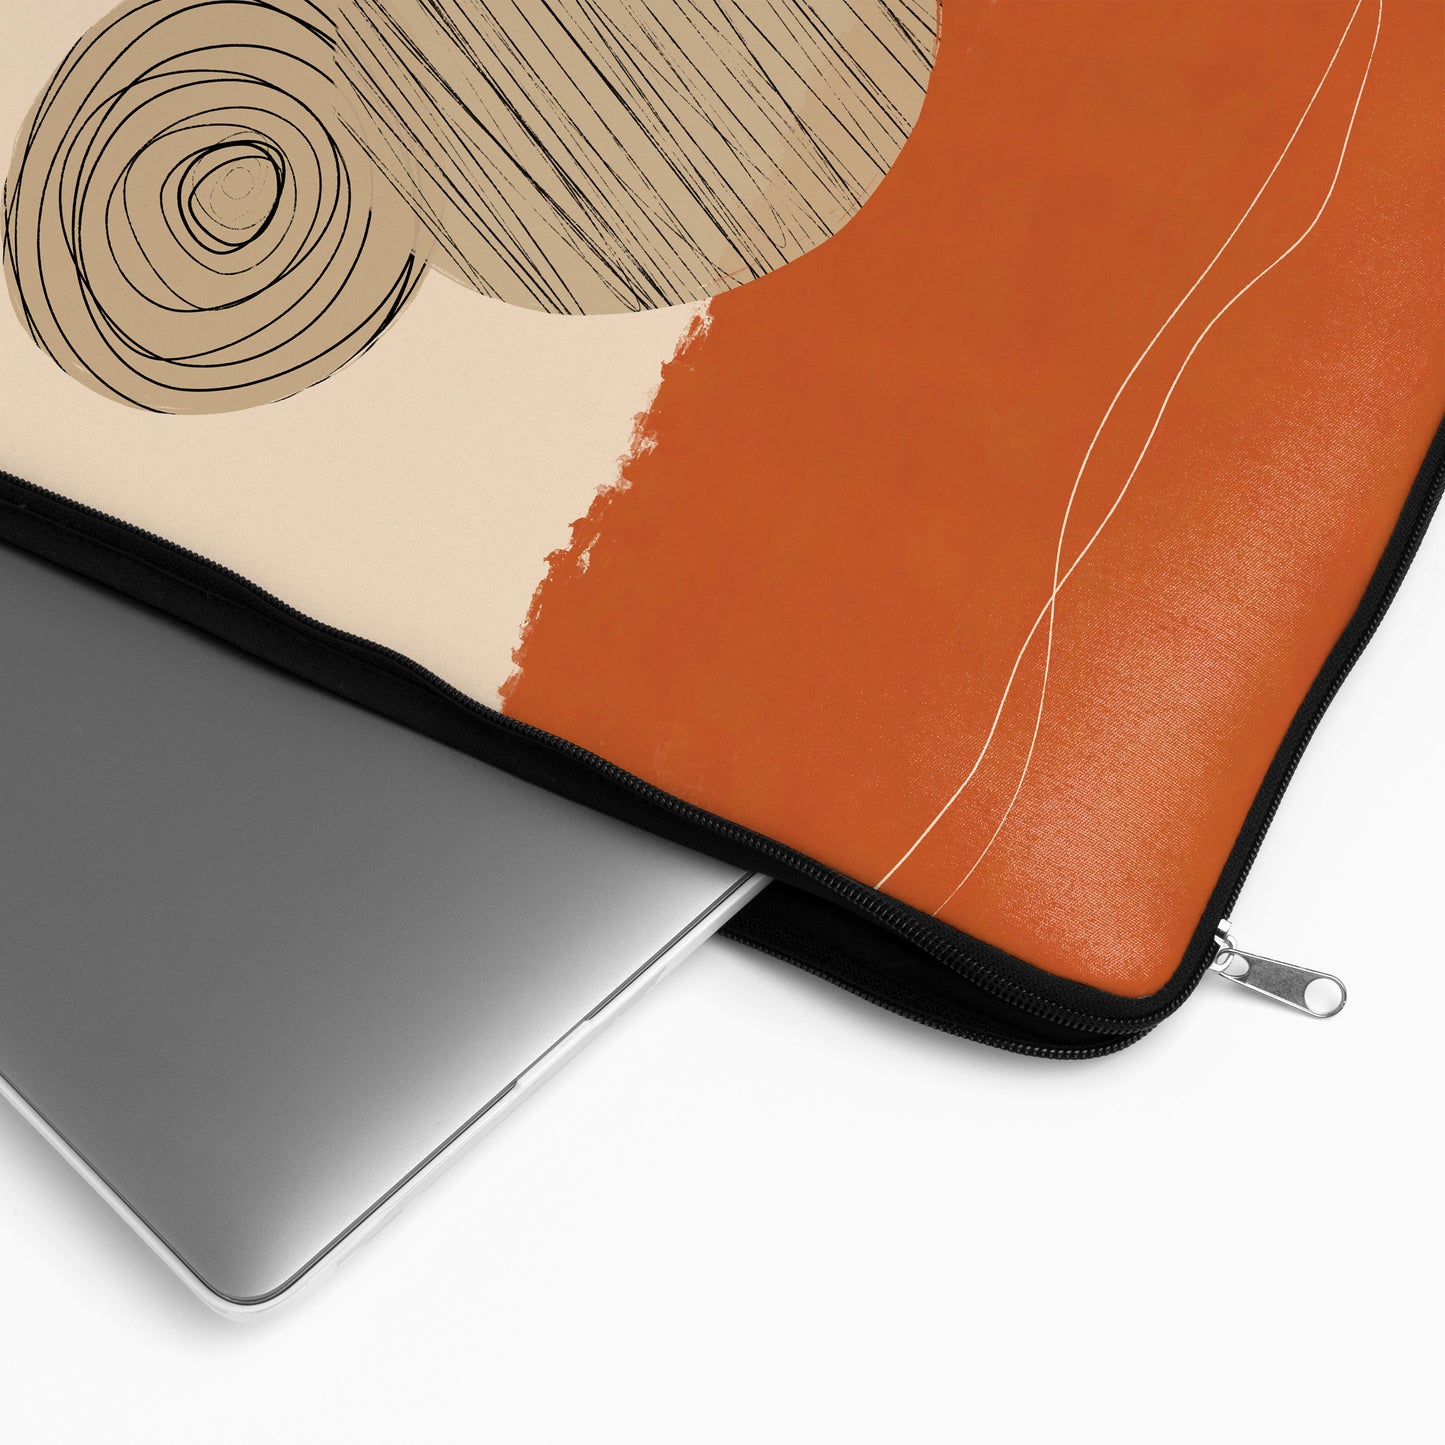 Farmhouse inspired Art - Laptop Sleeve